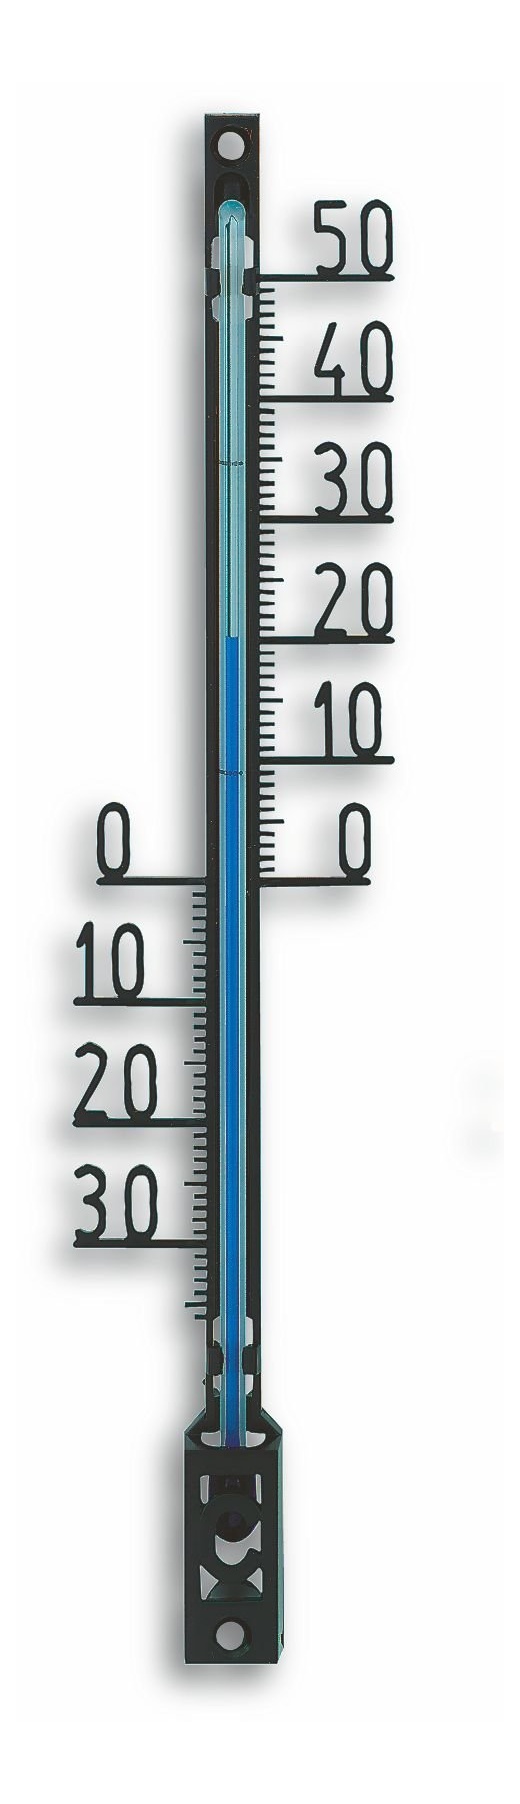 thermometer tfa